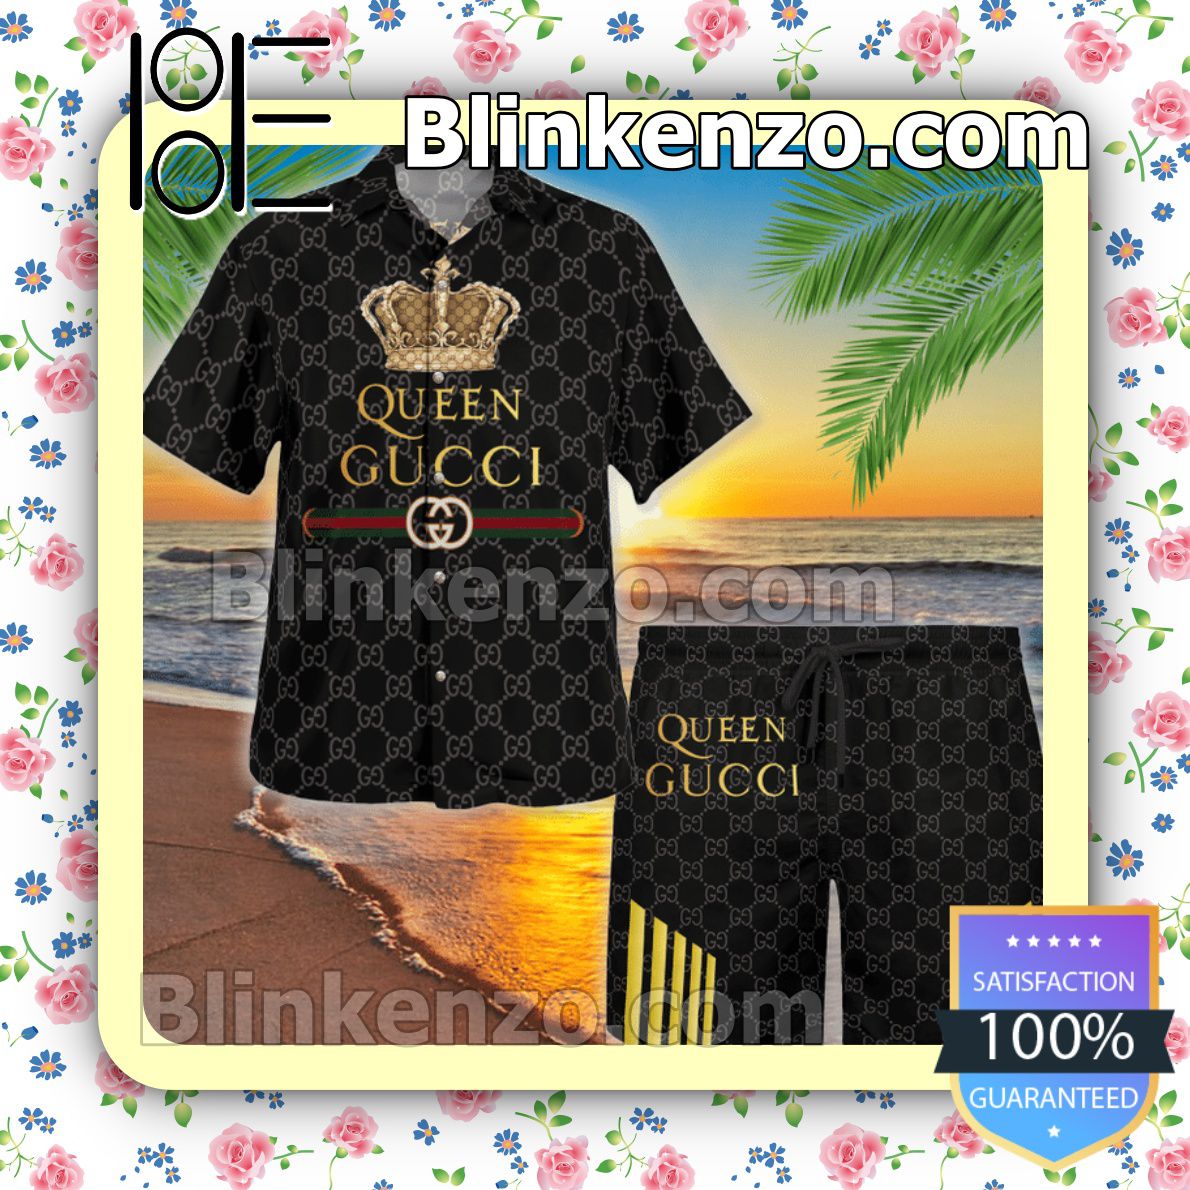 Queen Gucci Black Monogram Luxury Beach Shirts, Swim Trunks